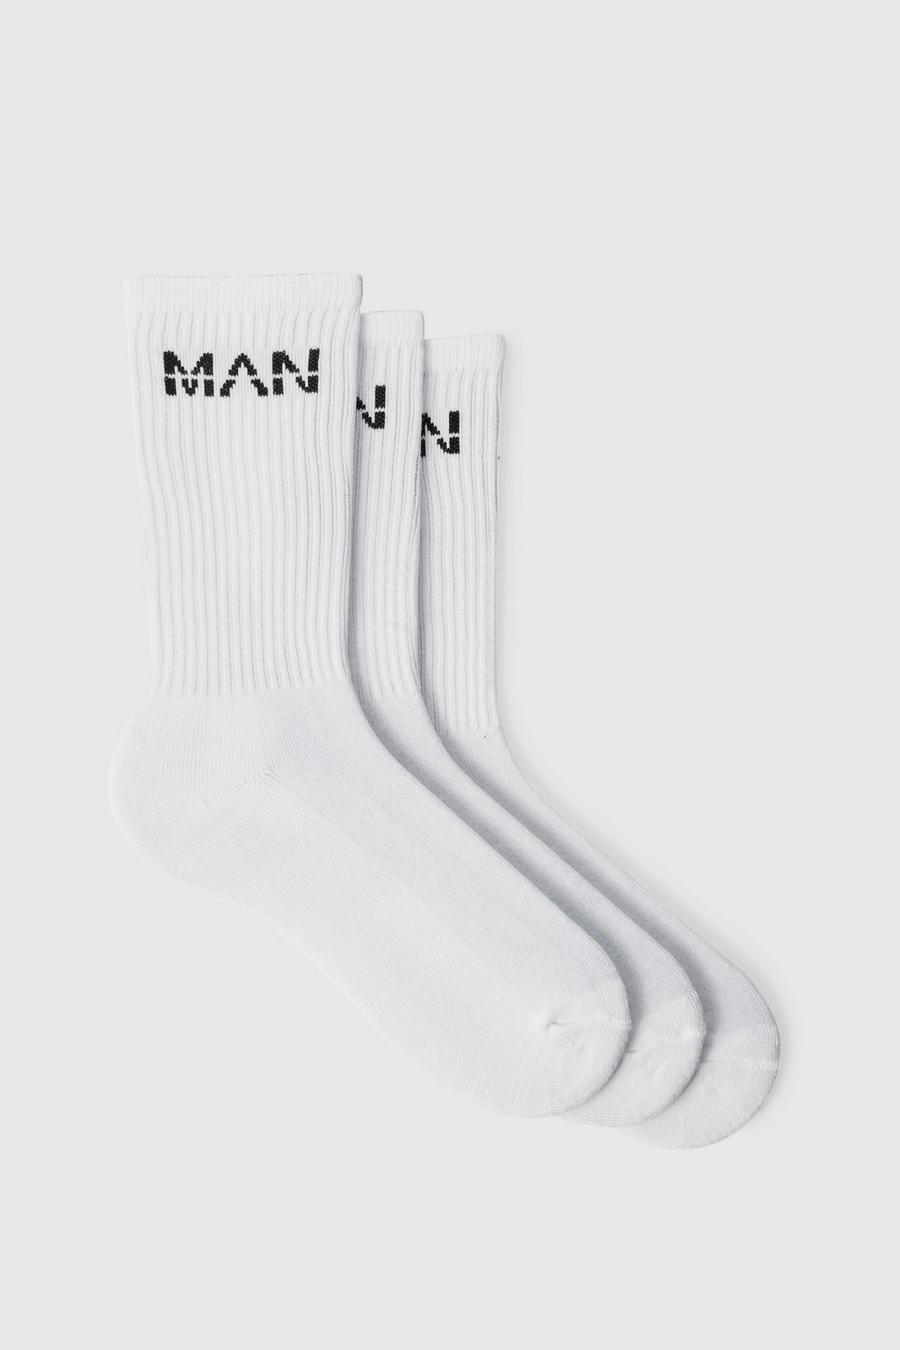 Pack de 3 pares de calcetines MAN deportivos, Black